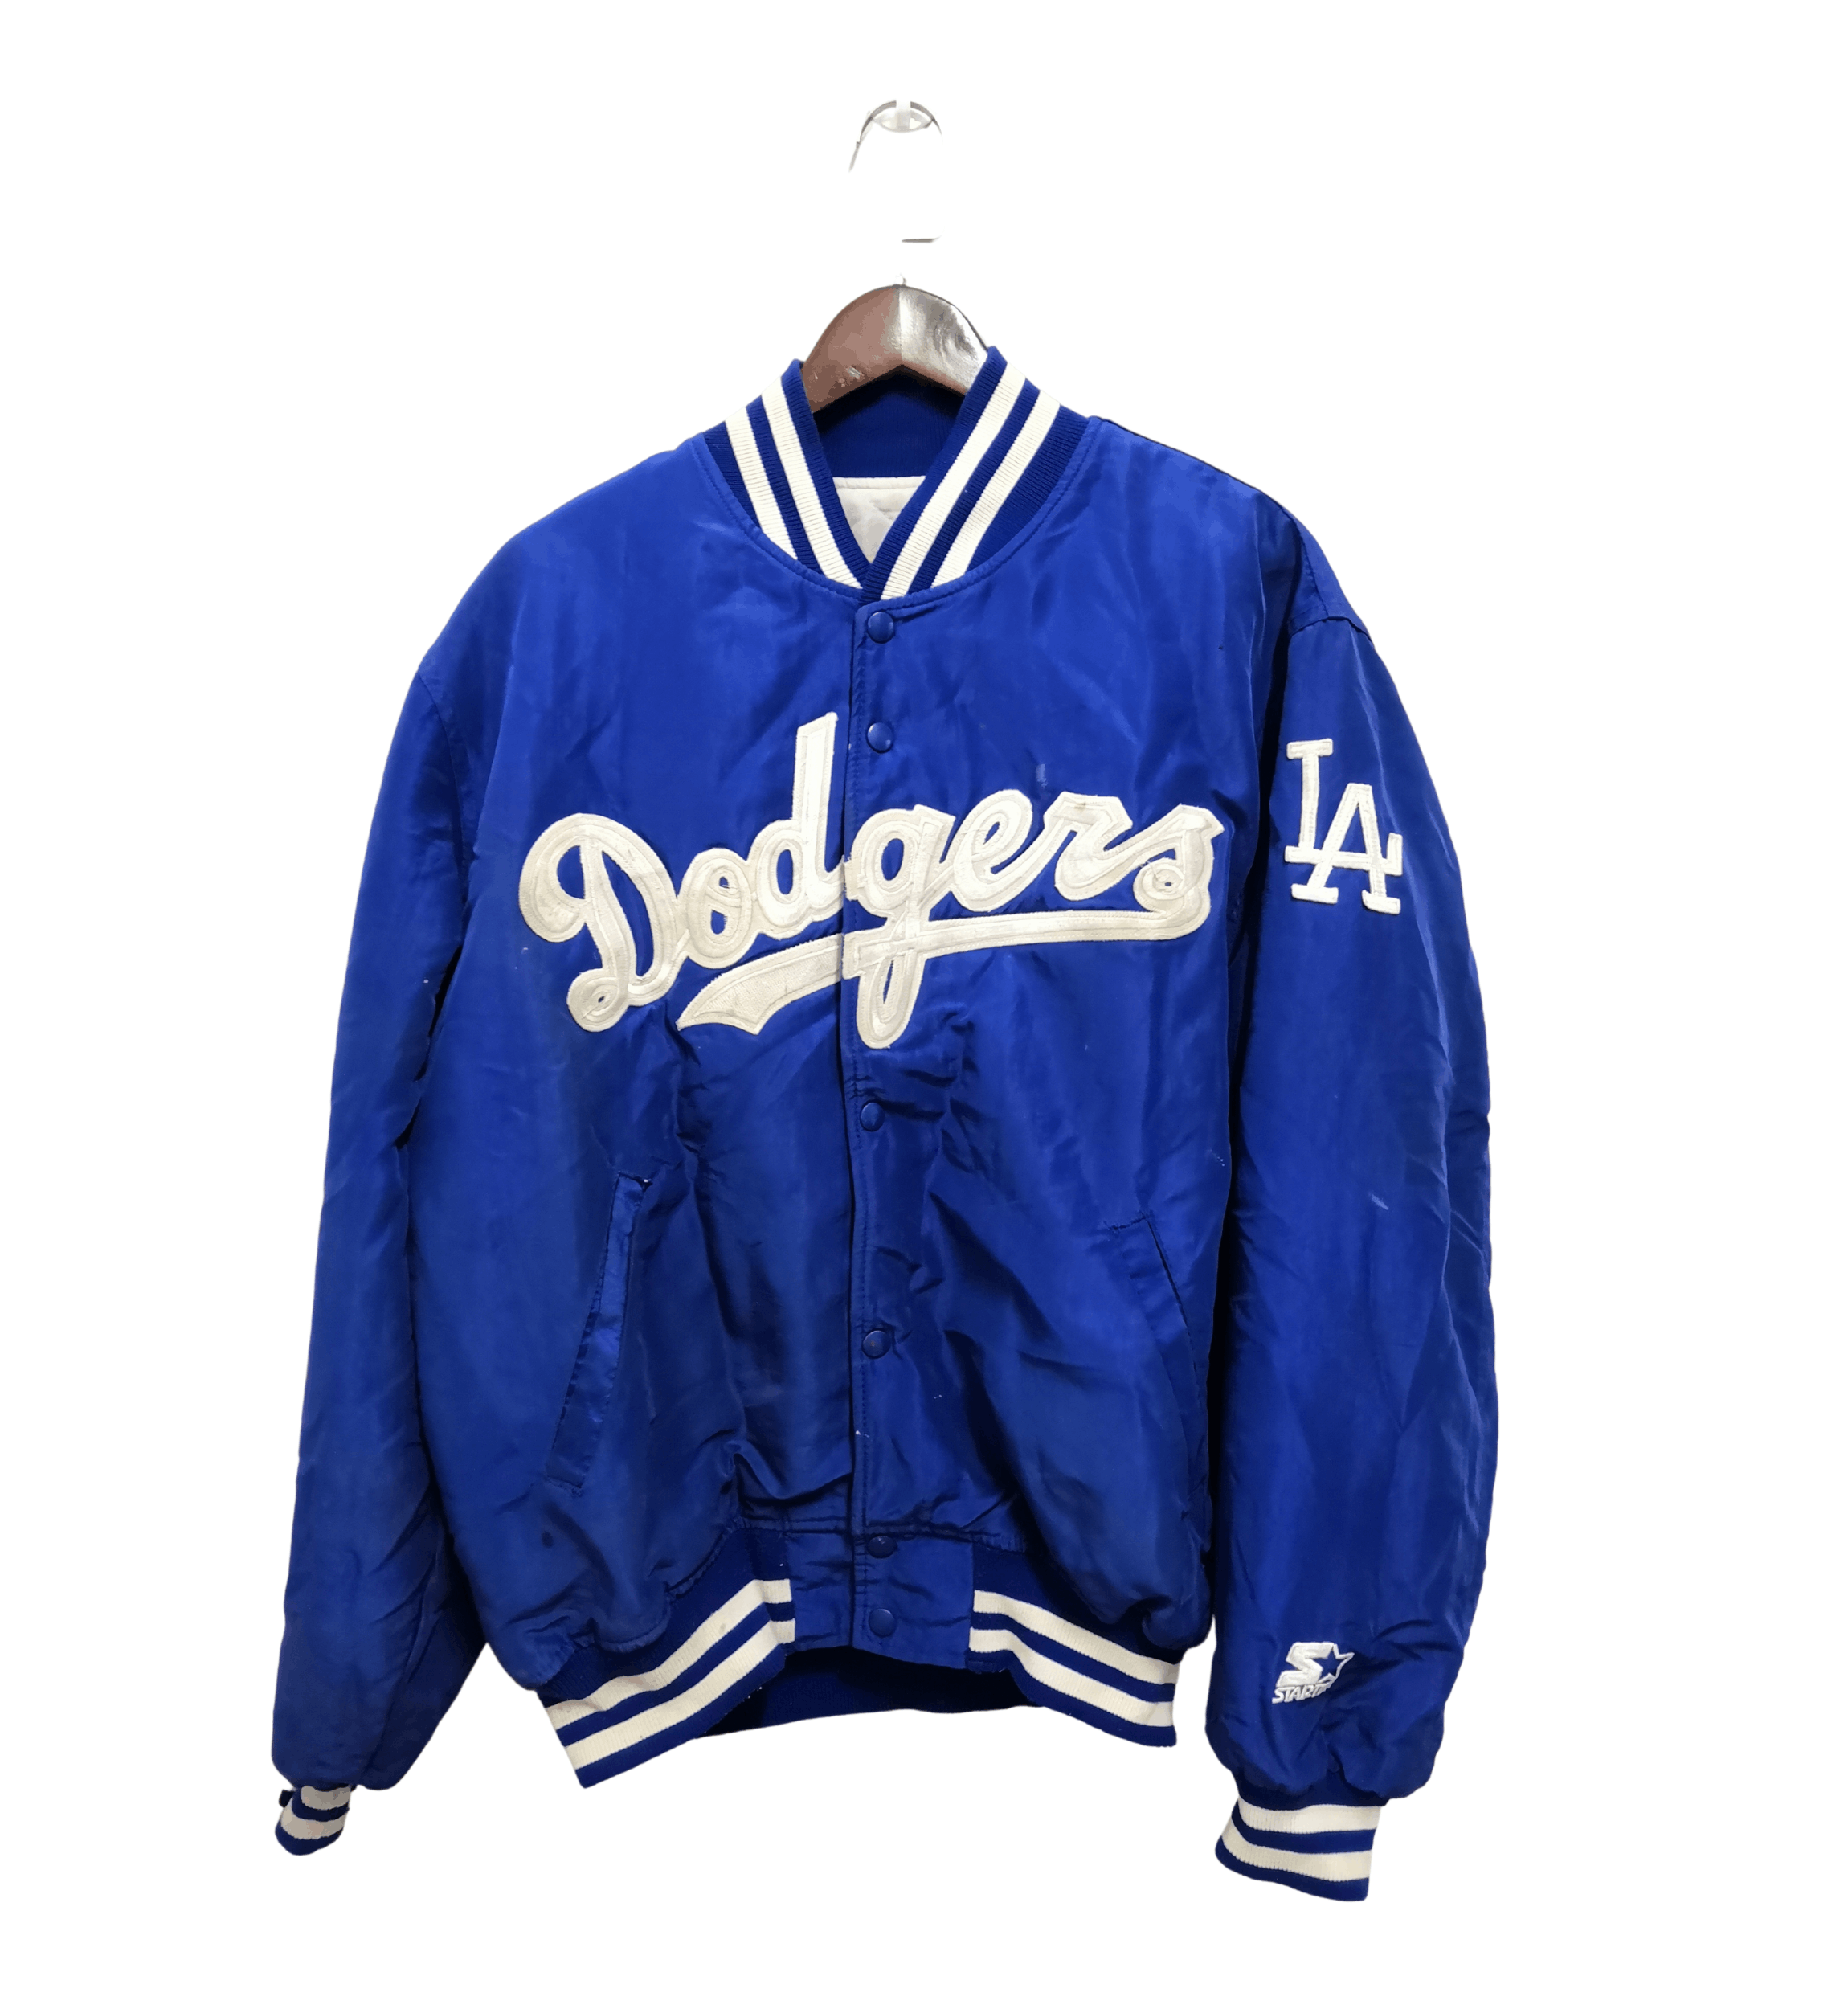 POLO RALPH LAUREN Men's MLB Collection Dodgers LA Satin Jacket size M NEW  NWT